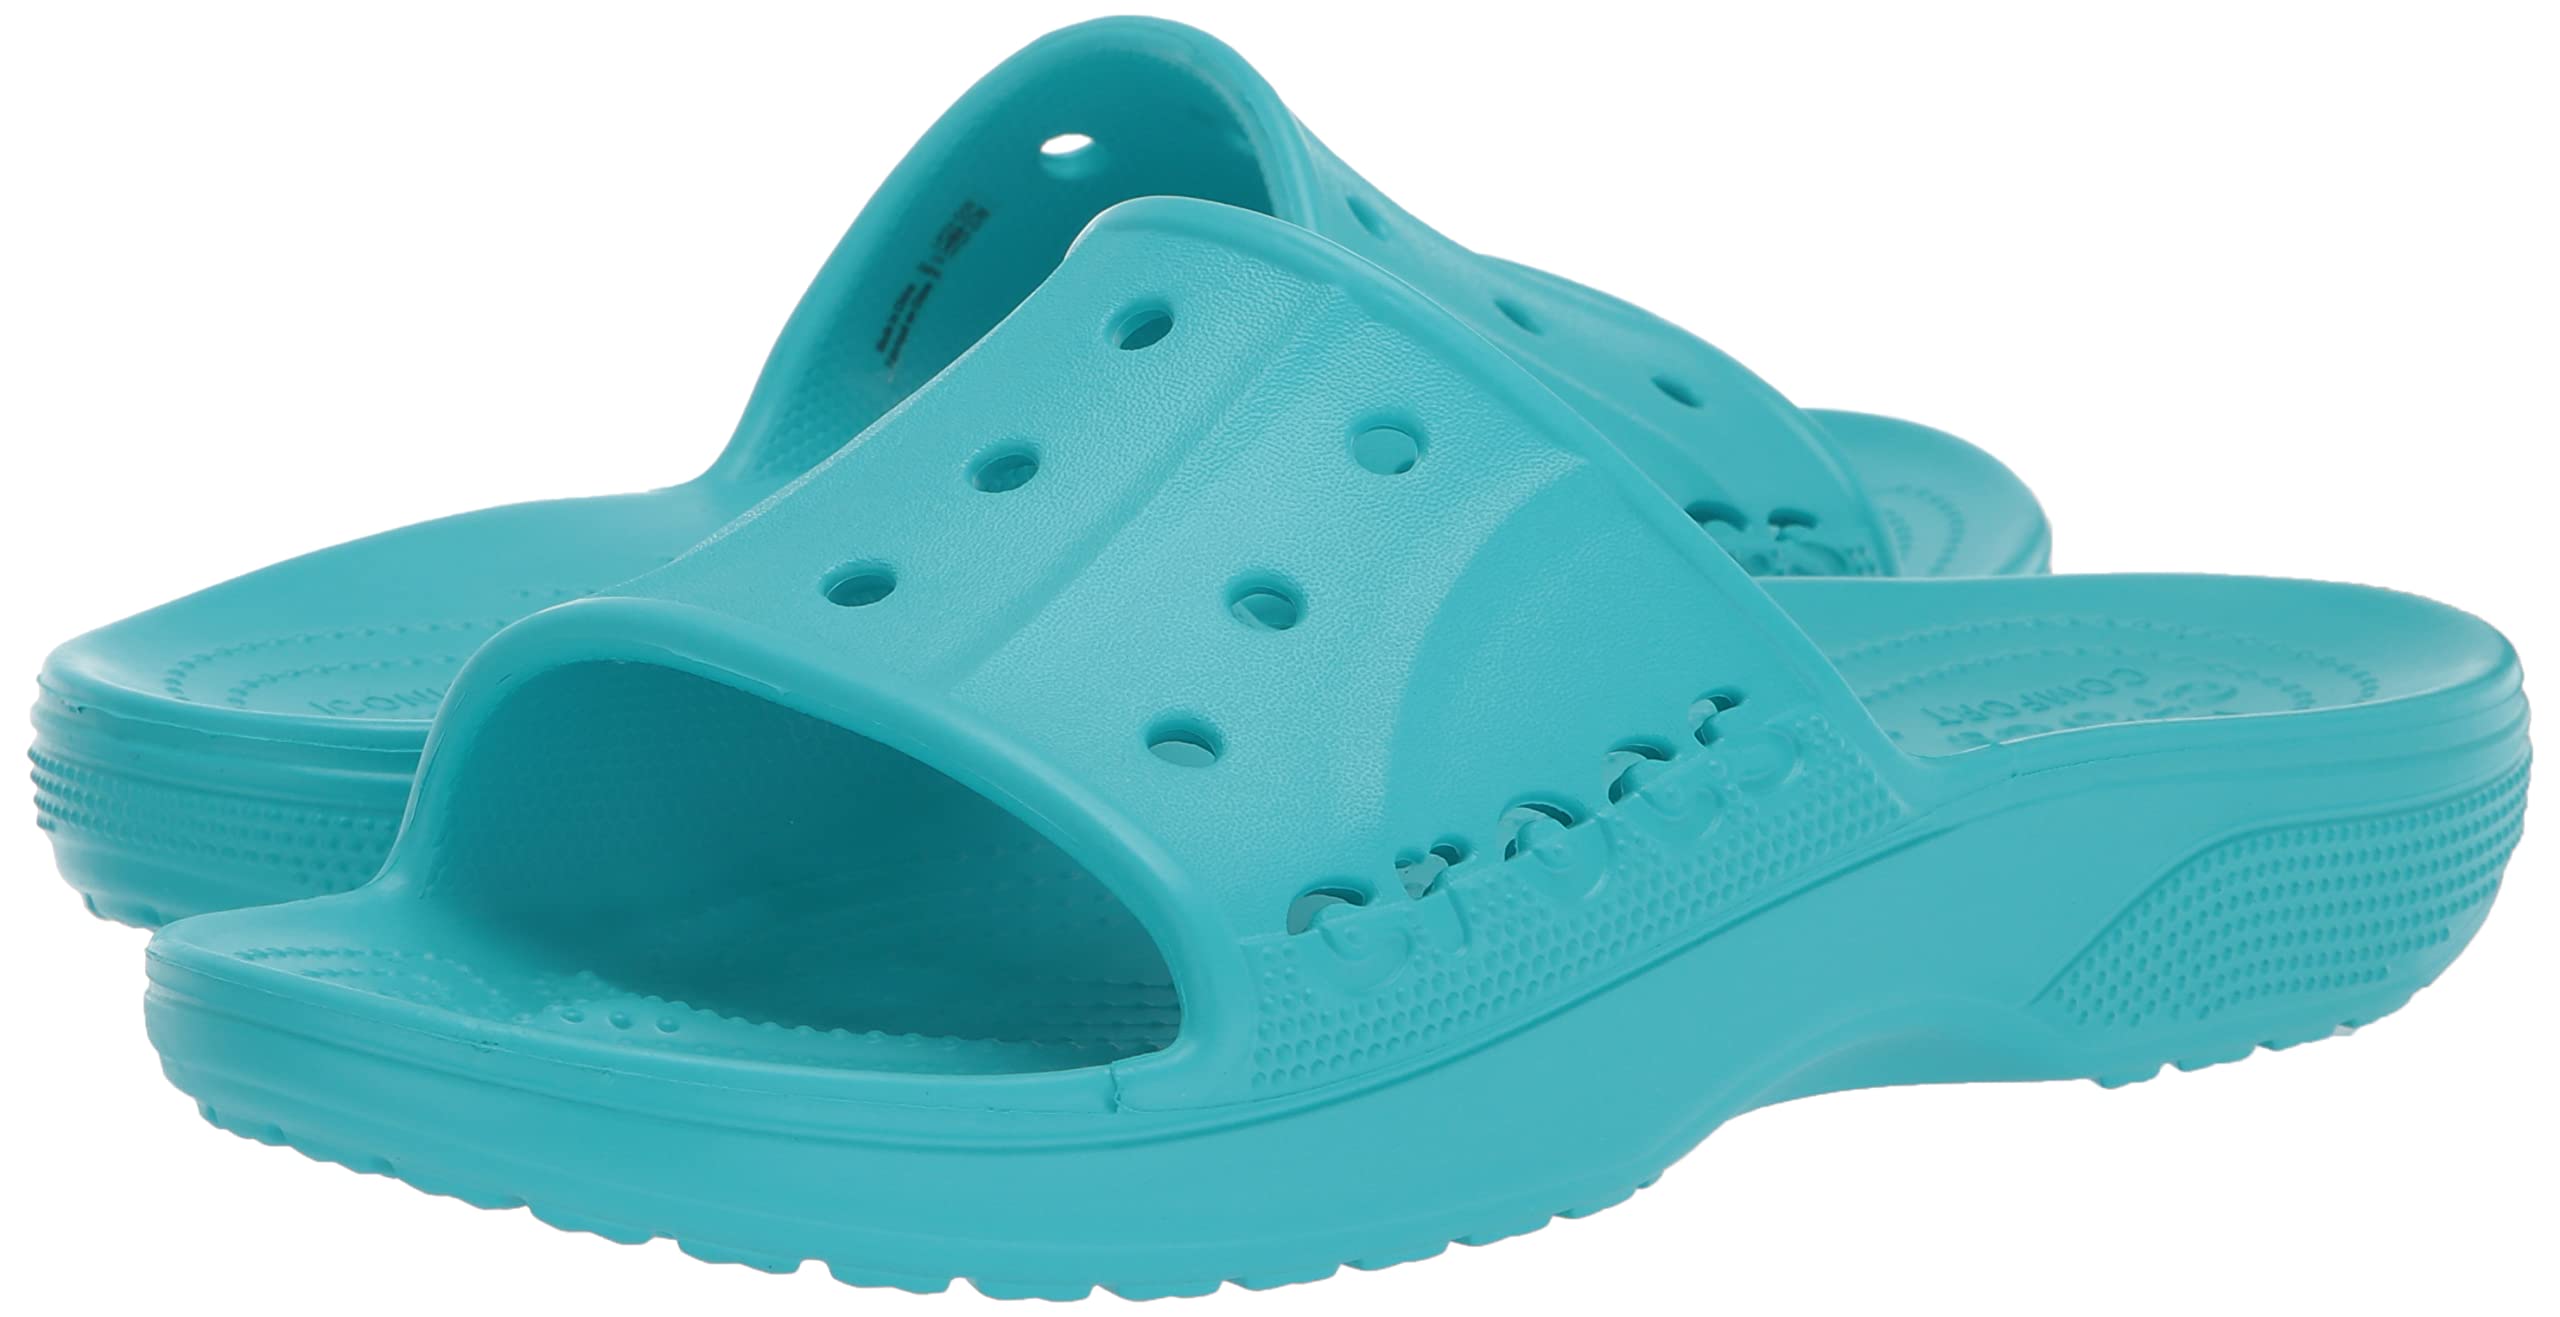 Crocs Unisex-Adult Baya II Slides Sandal (Seasonal Colors)